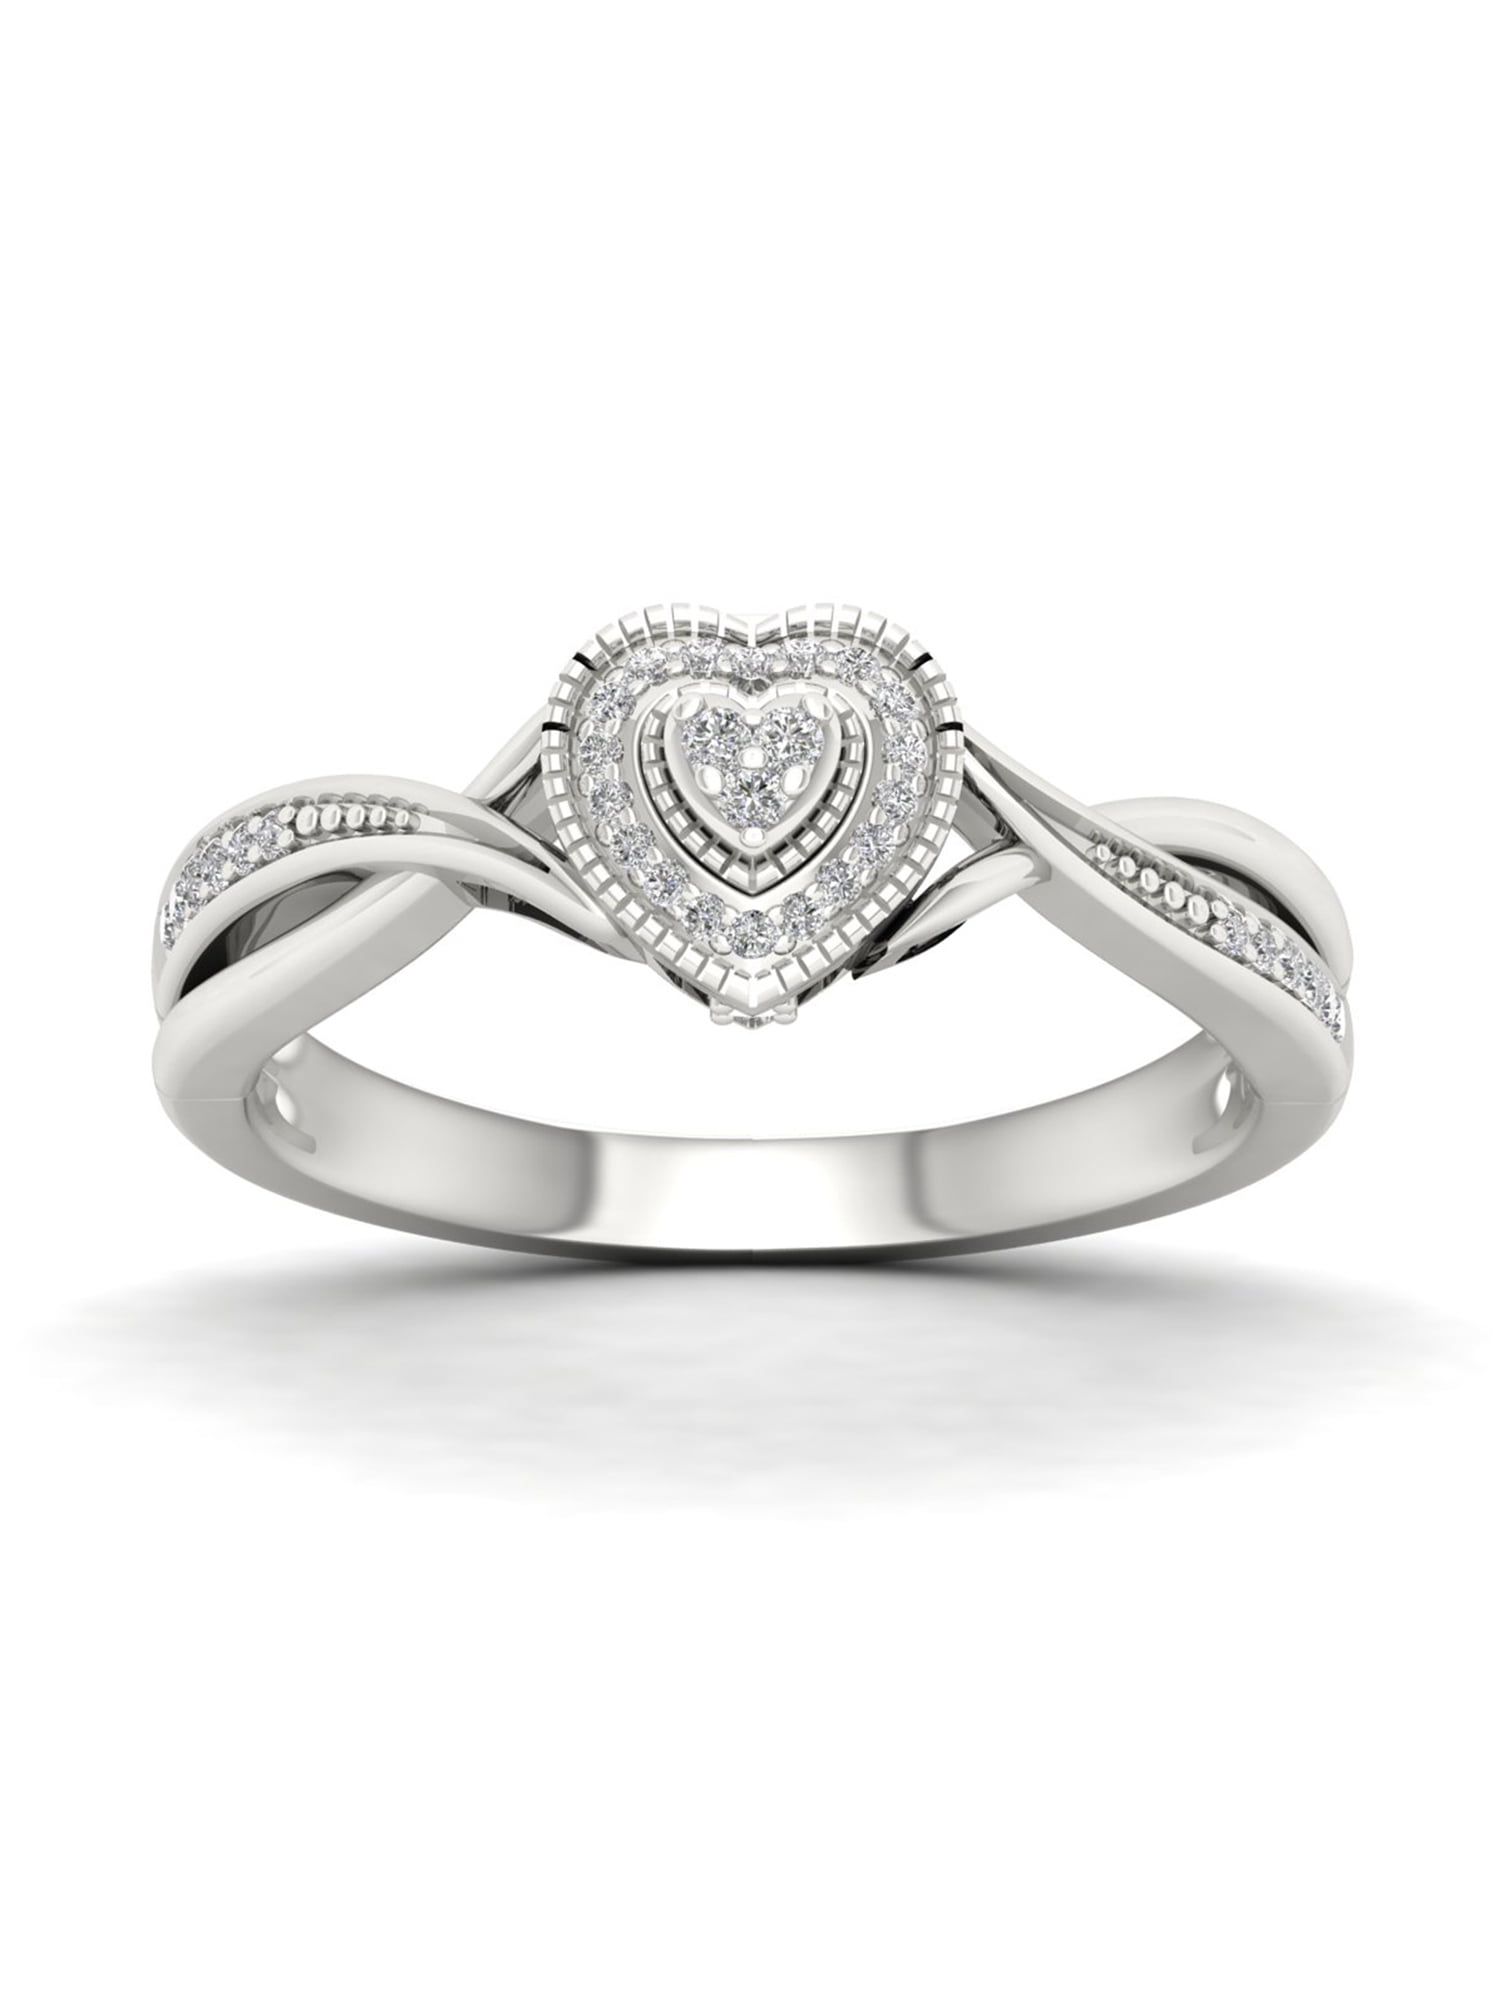 S925 Sterling Silver Finger Rings Women Fashion Love Heart White CZ Wedding NEW 